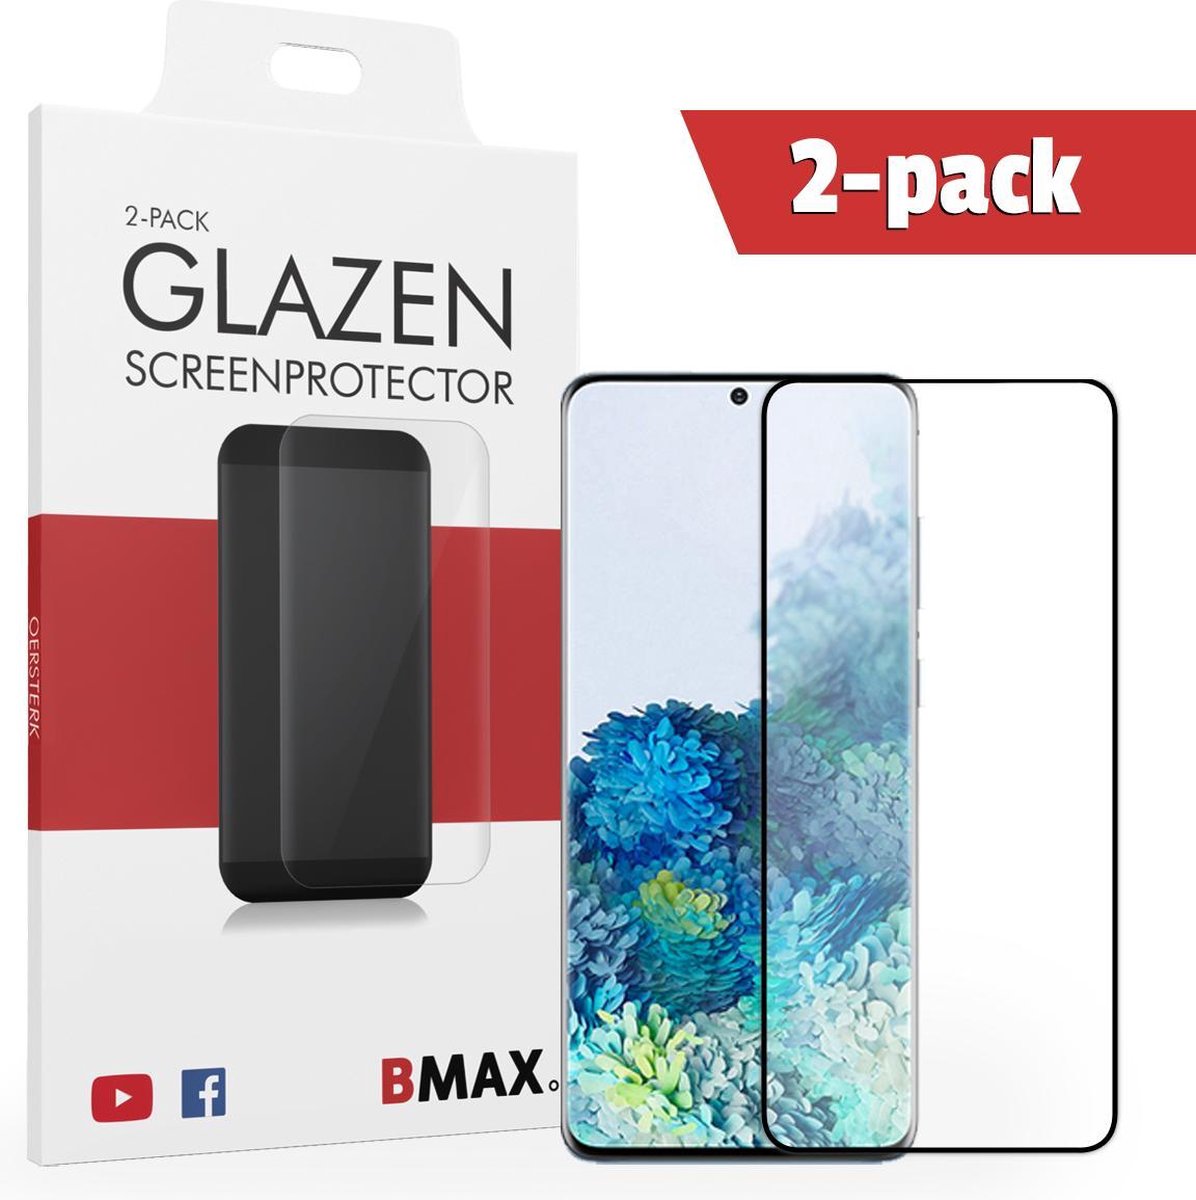 2-pack Bmax Samsung Galaxy S20+ Screenprotector - Glass - Full Cover 5d - Black